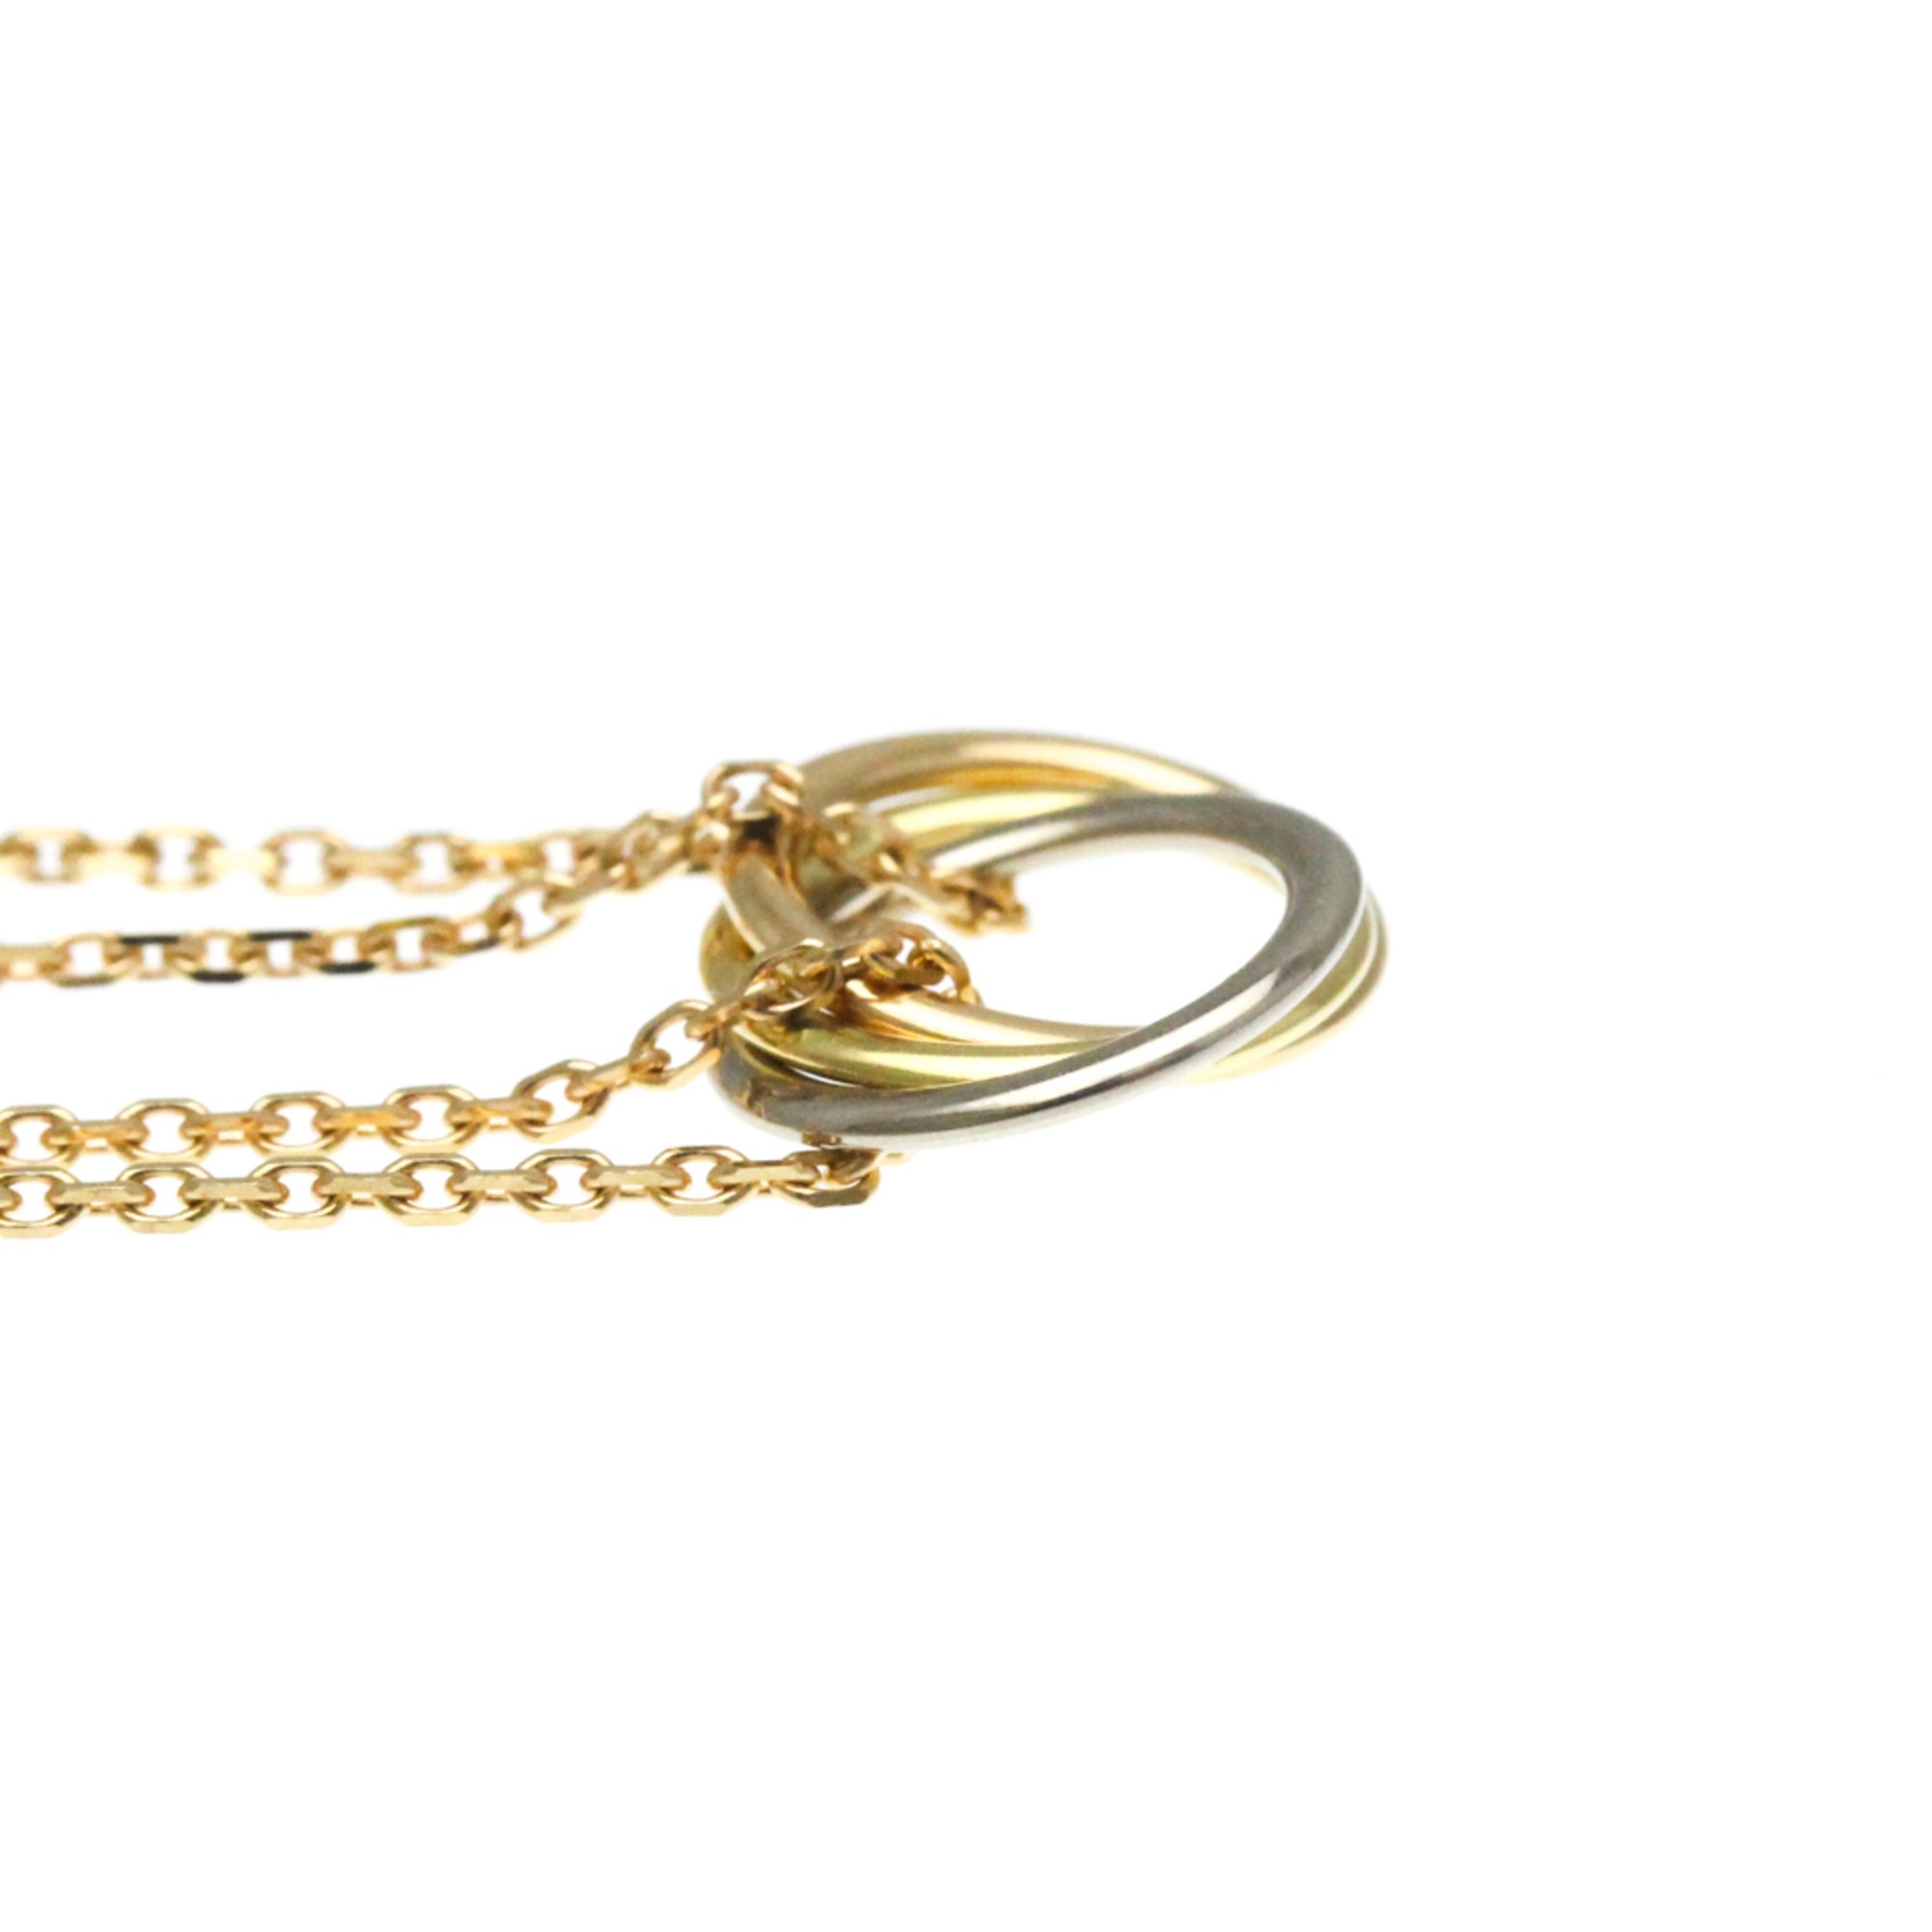 Cartier Baby Trinity Bracelet B6036818 Pink Gold (18K),White Gold (18K),Yellow Gold (18K) No Stone Charm Bracelet Gold